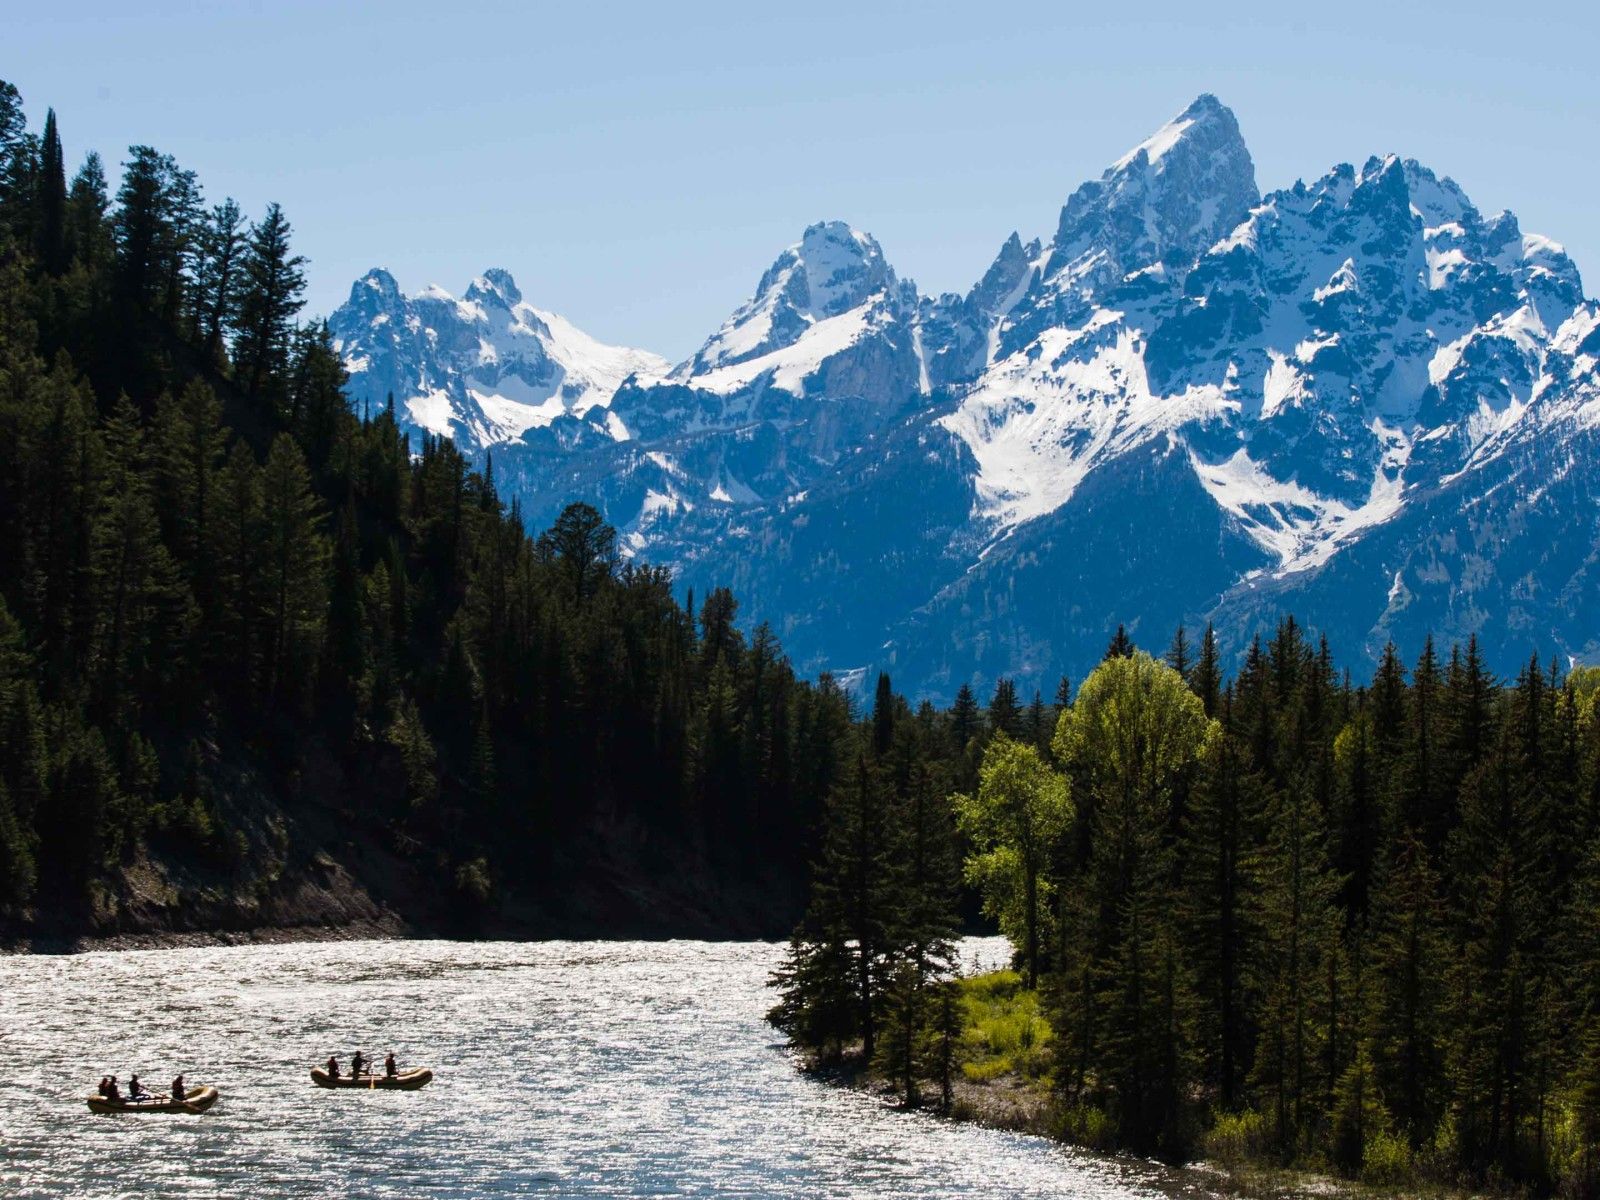 The Best National Parks for Rafting - Snake River Rafting in Grand Teton National Park